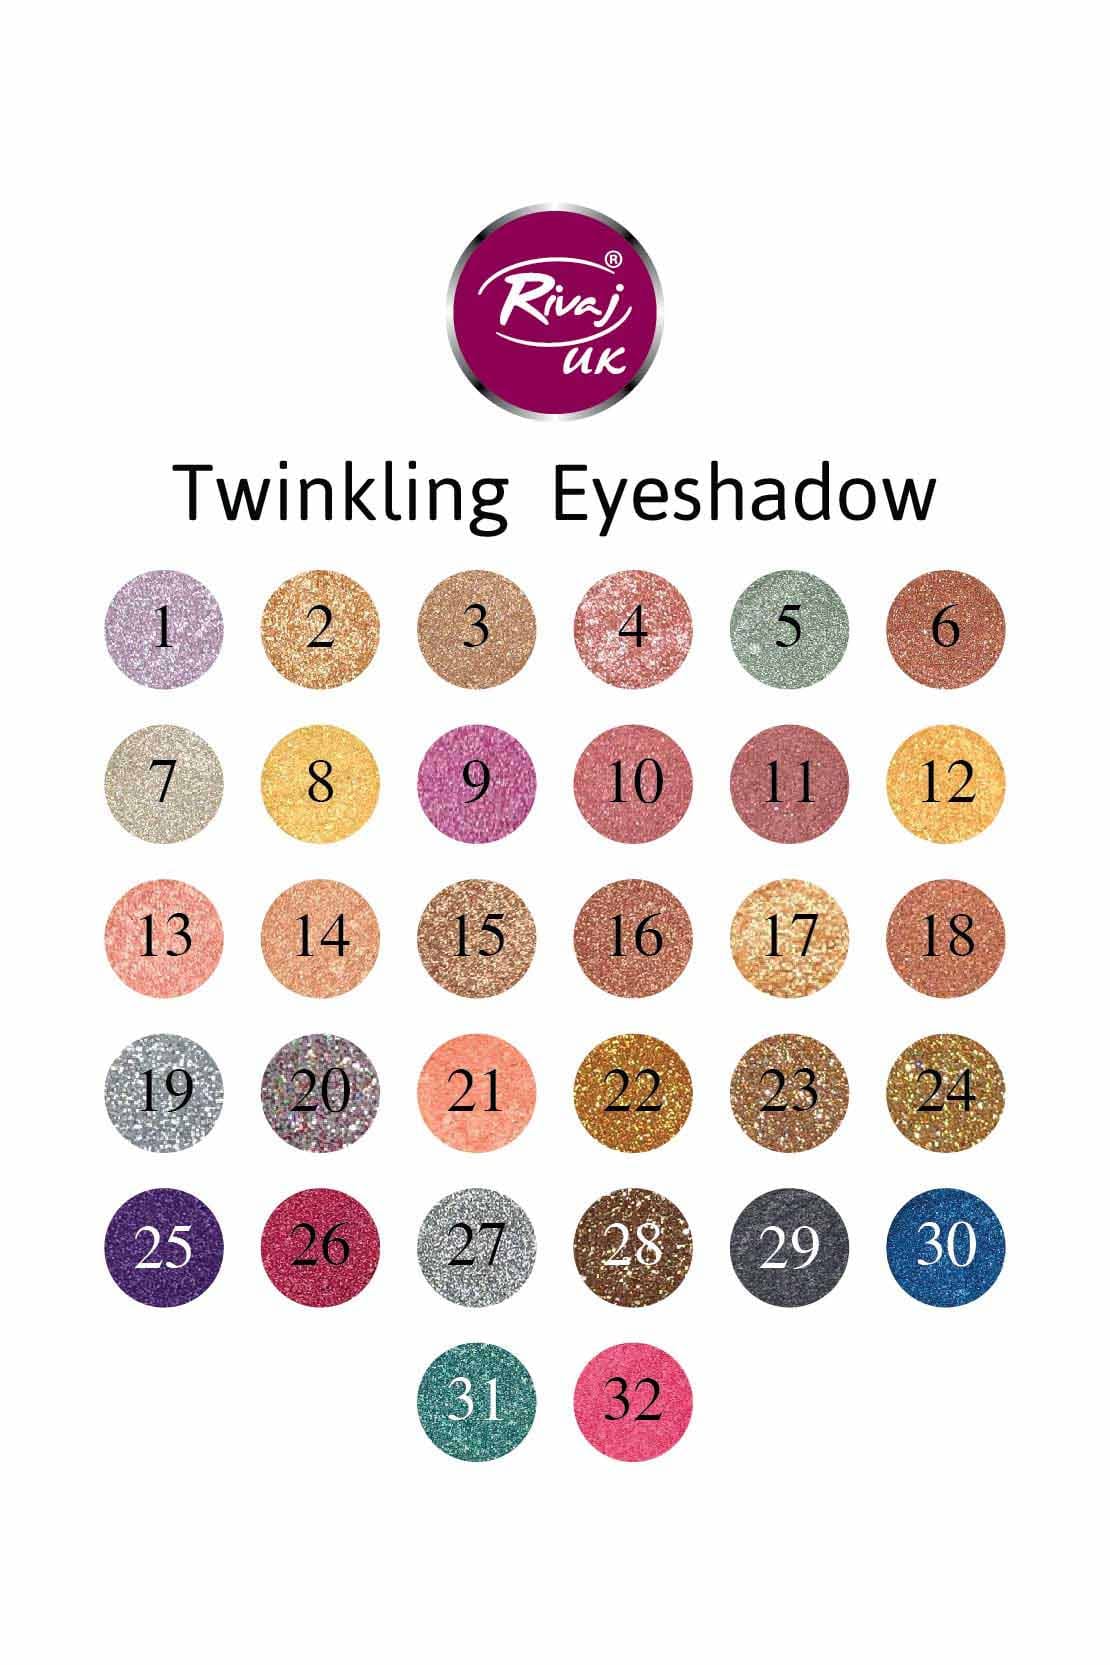 Rivaj UK Twinkling Eyeshadow Shade # 26